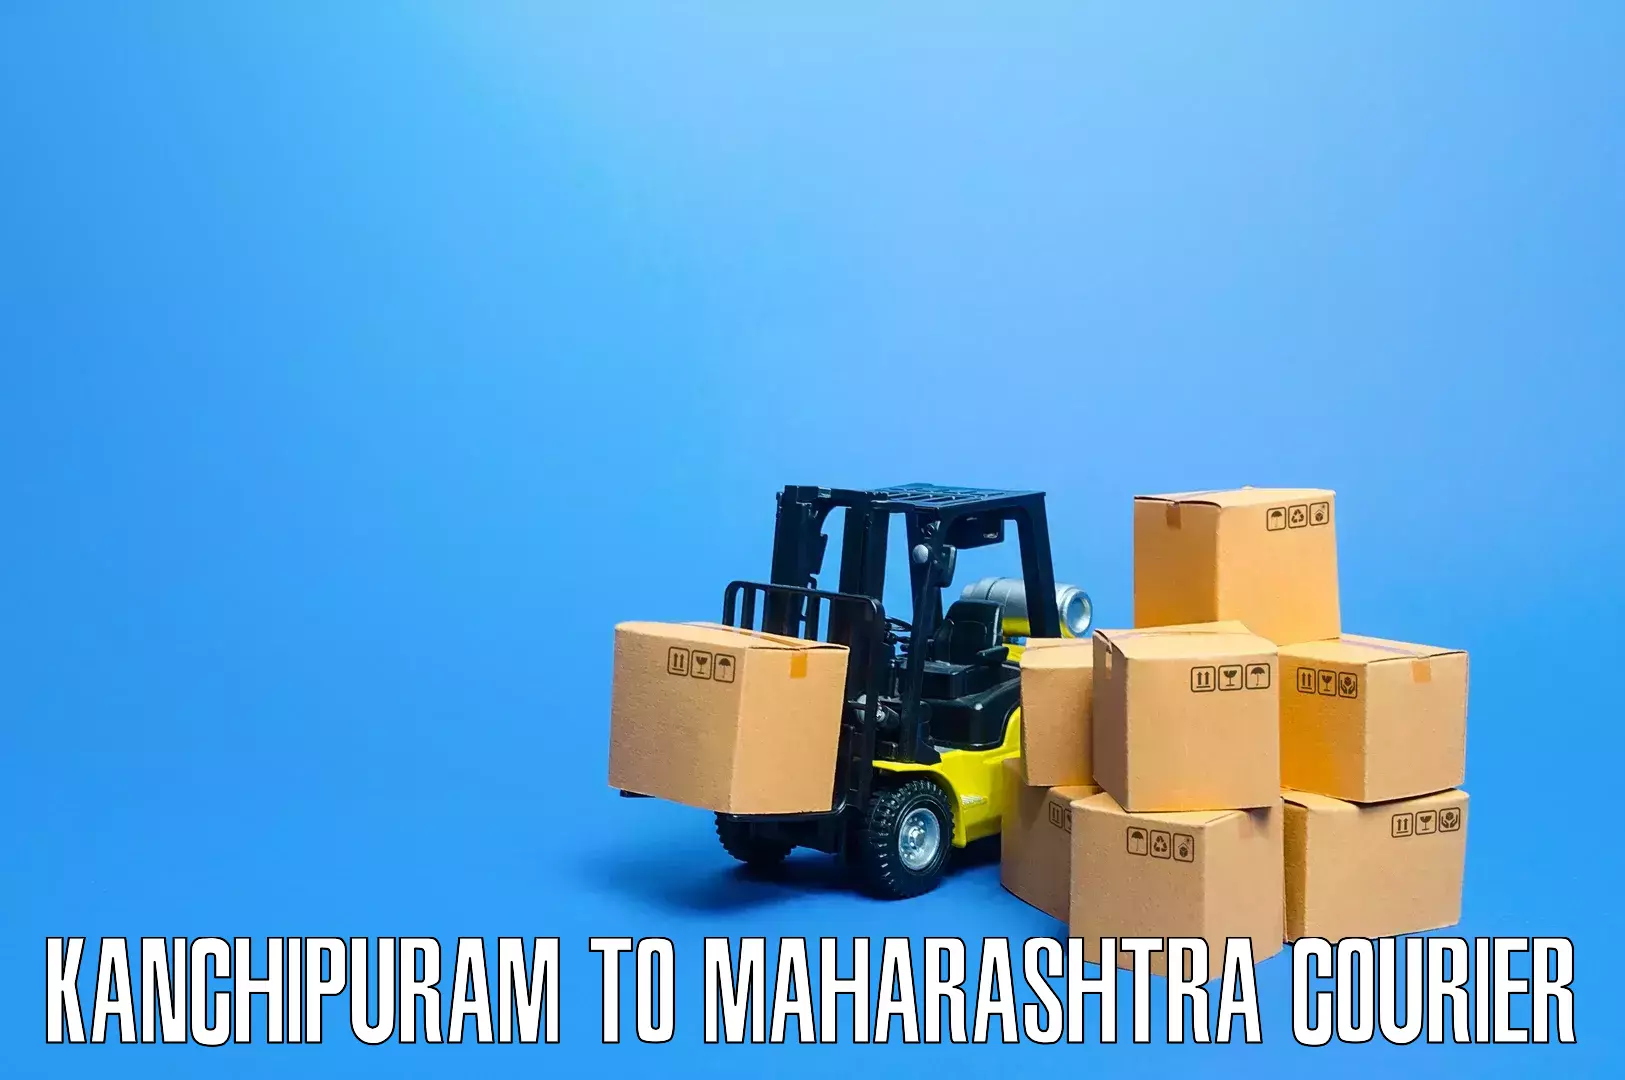 Furniture delivery service Kanchipuram to Kopargaon